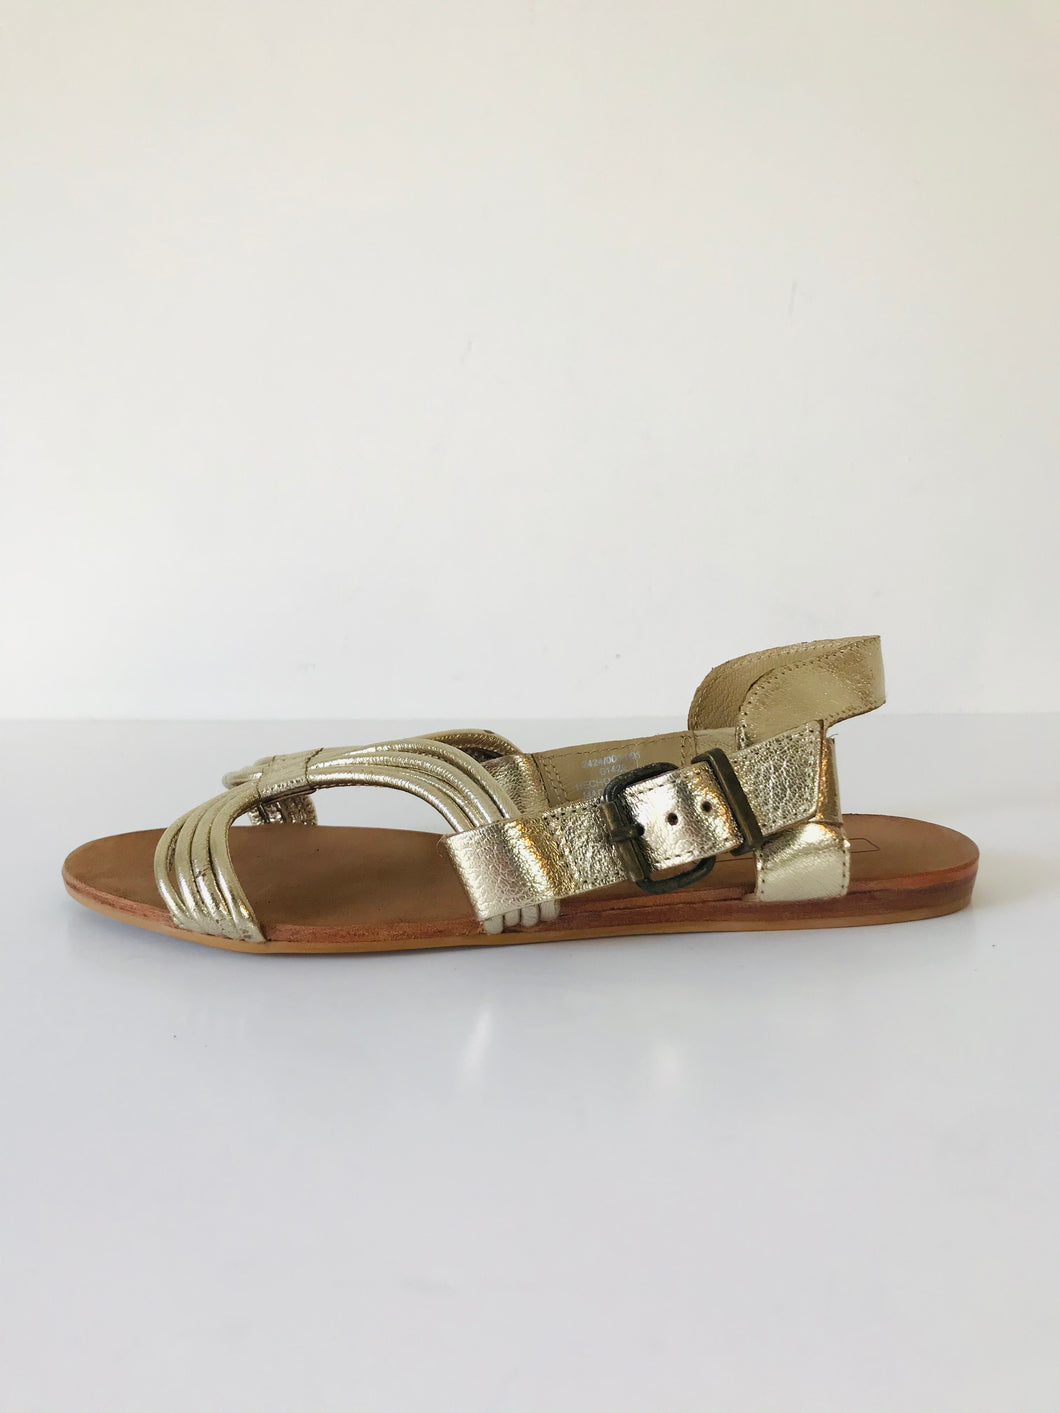 Zara Women’s Metallic Leather Gladiator Sandals Flats | 38 UK5 | Gold